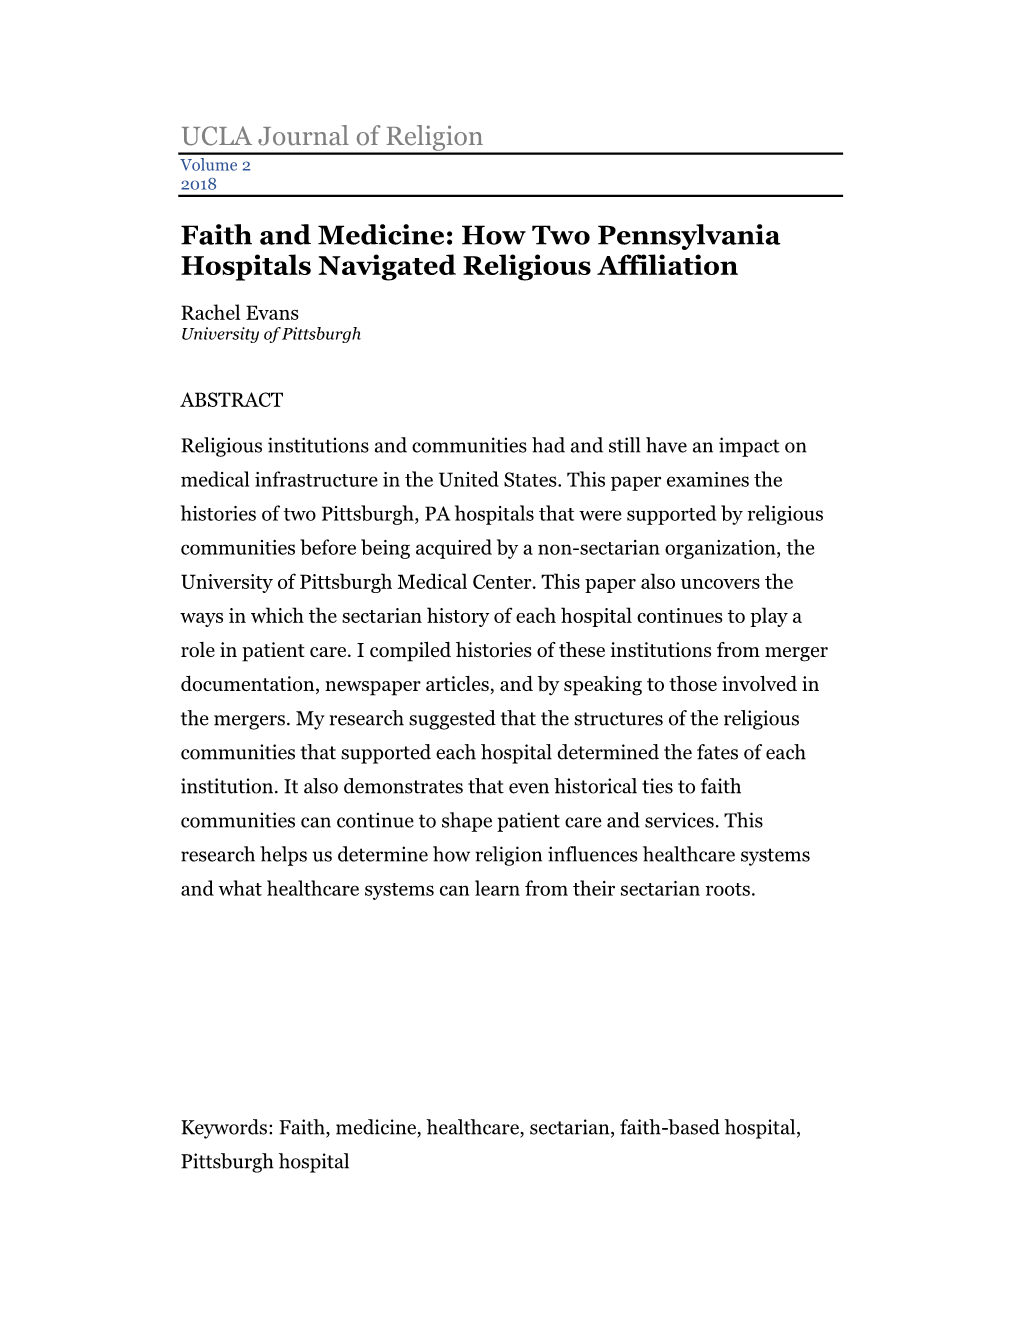 UCLA Journal of Religion Faith and Medicine: How Two Pennsylvania